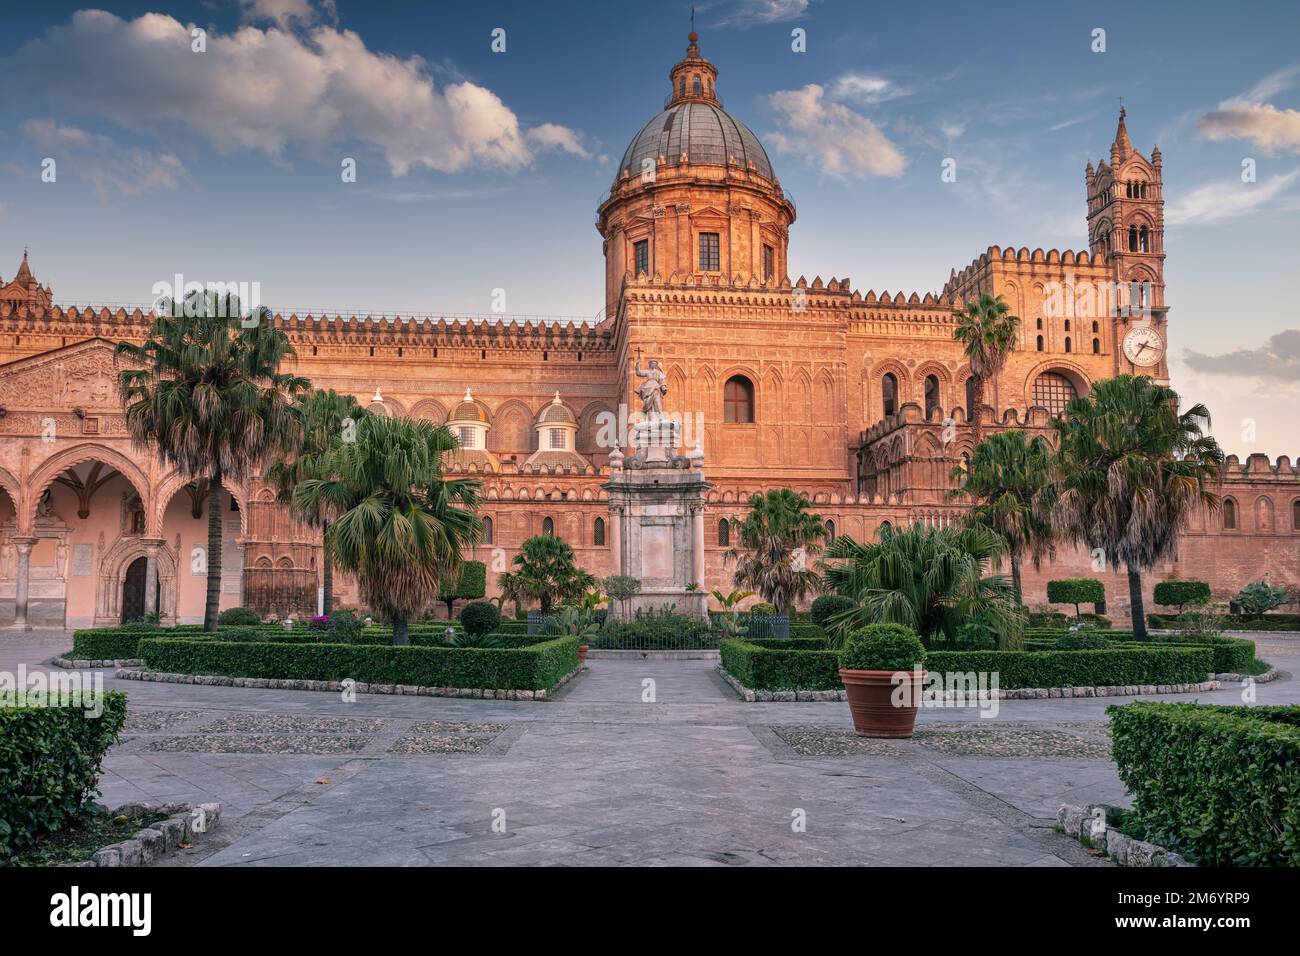 Kathedrale Von Palermo, Sizilien, Italien. Stadtbild der berühmten Kathedrale von Palermo in Palermo, Italien bei Sonnenaufgang. Stockfoto